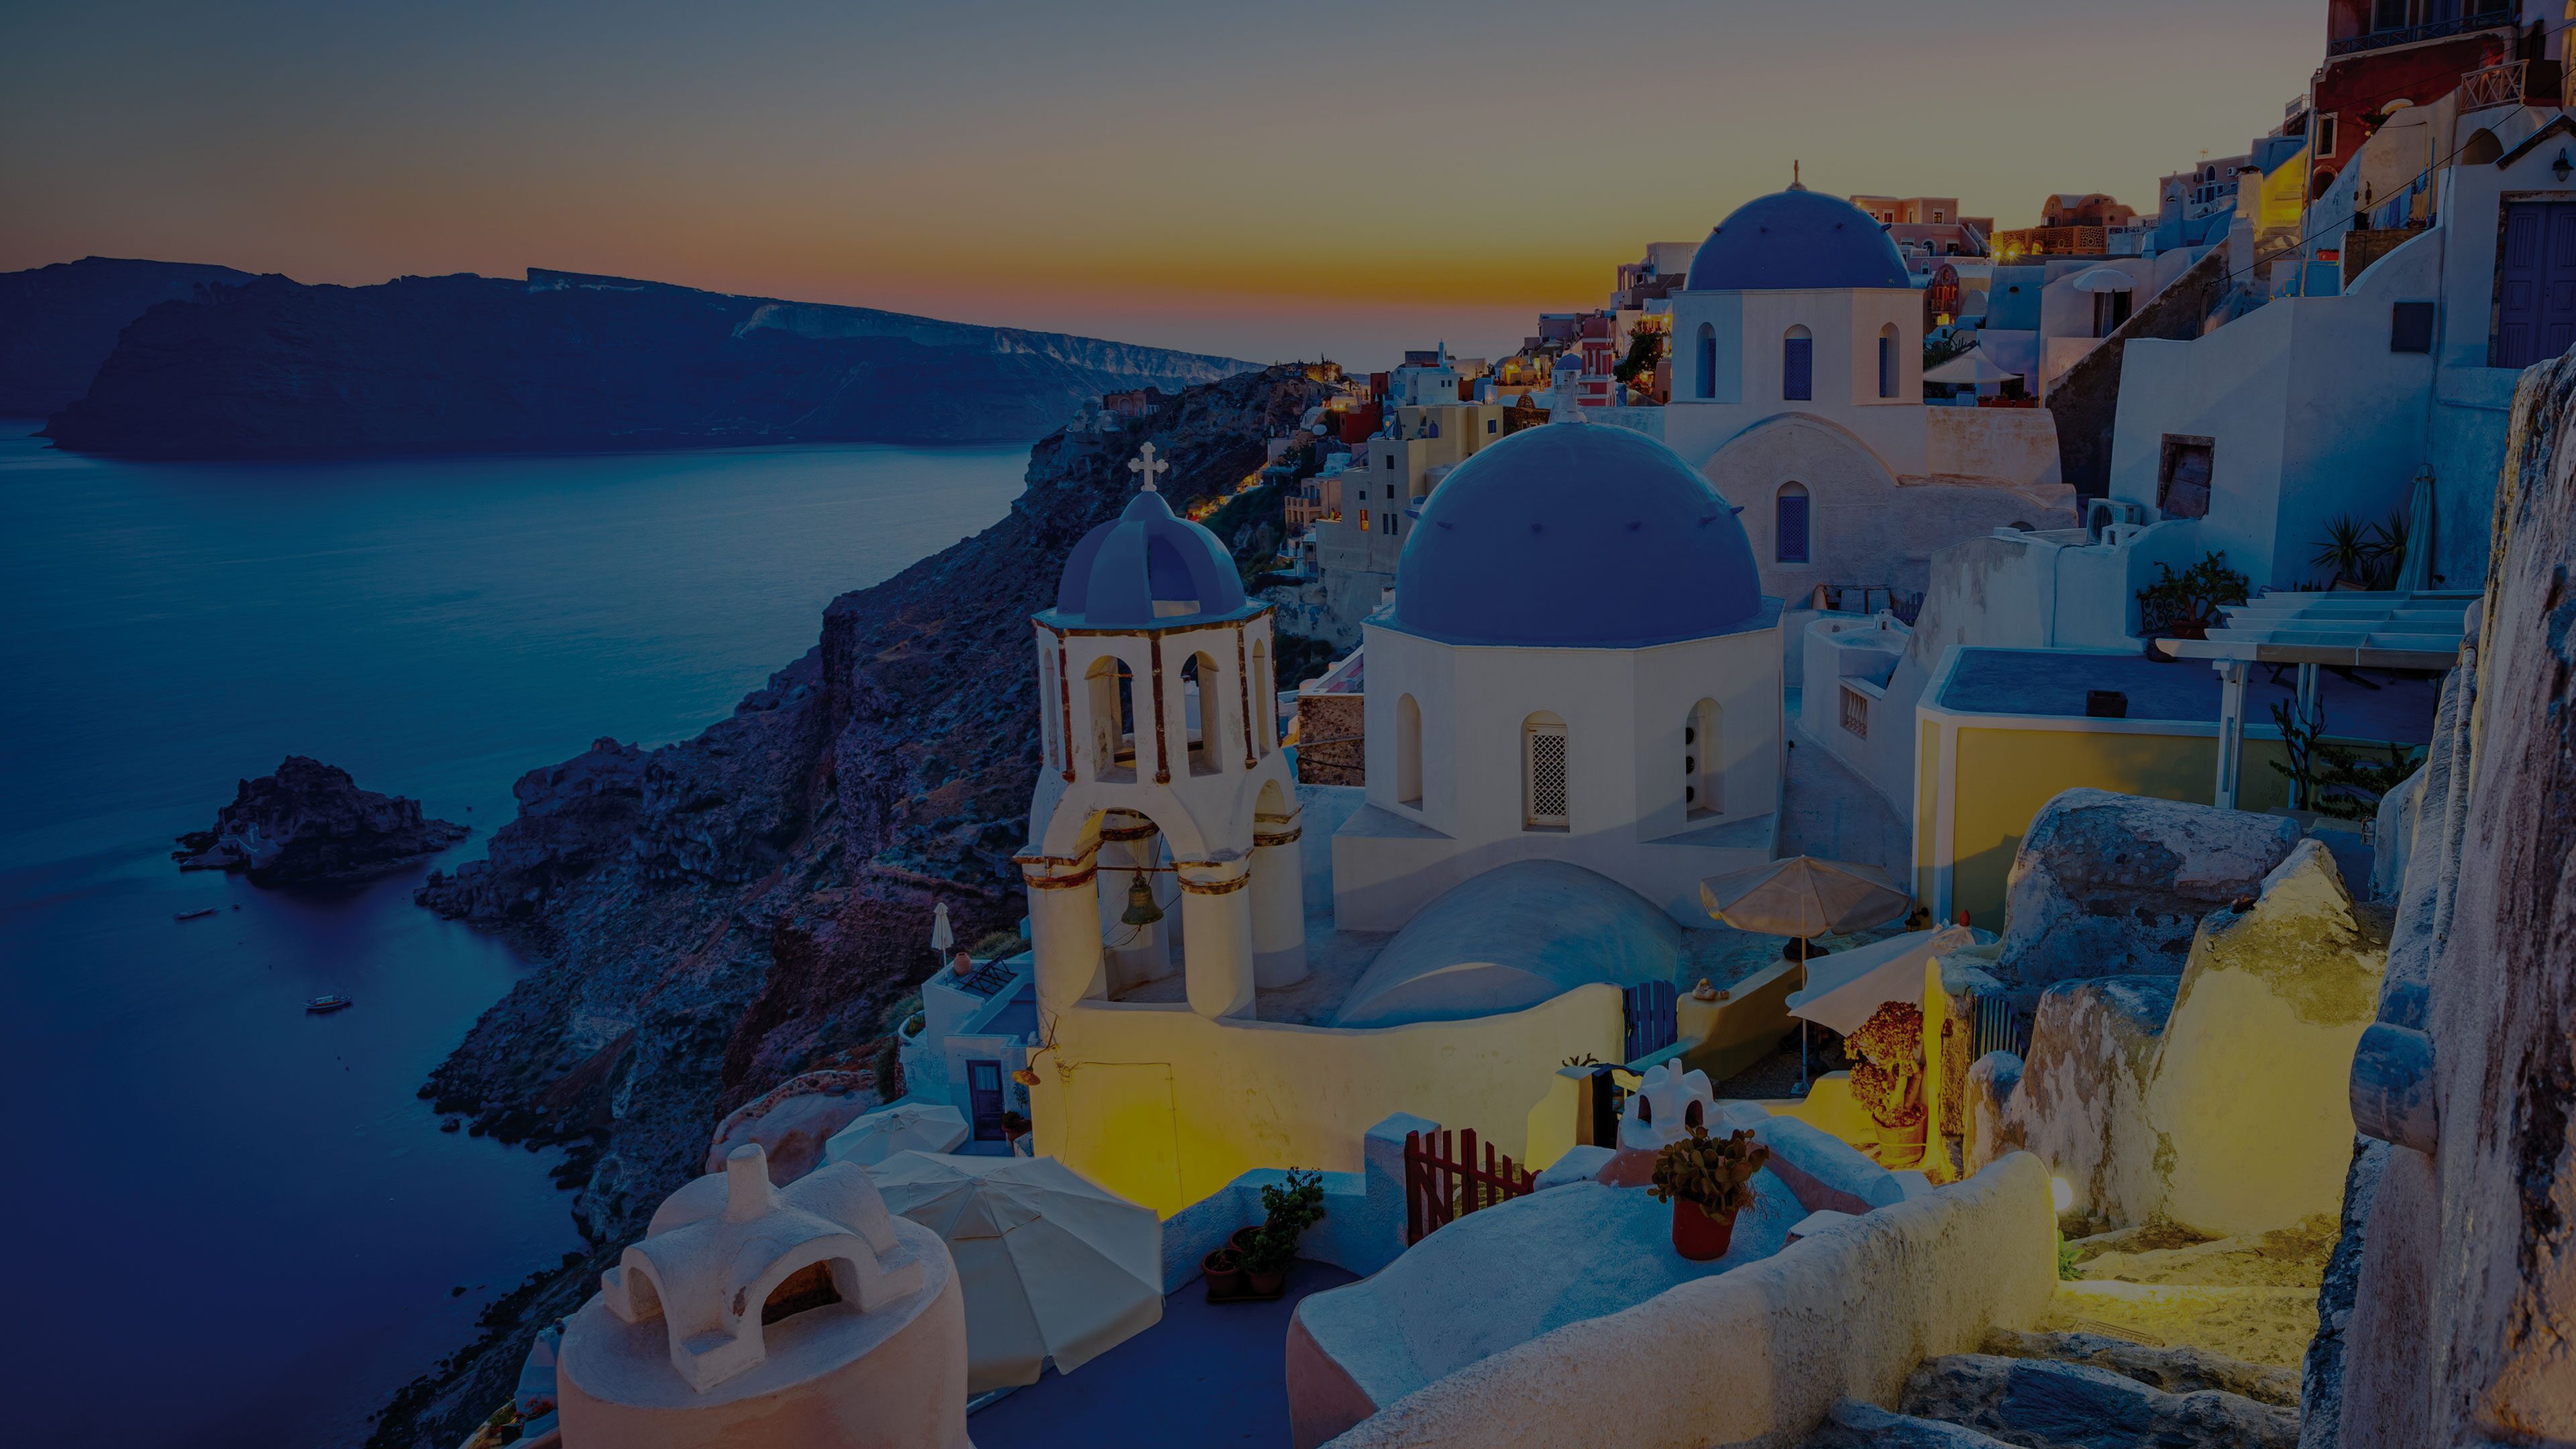 greek island cruise in december